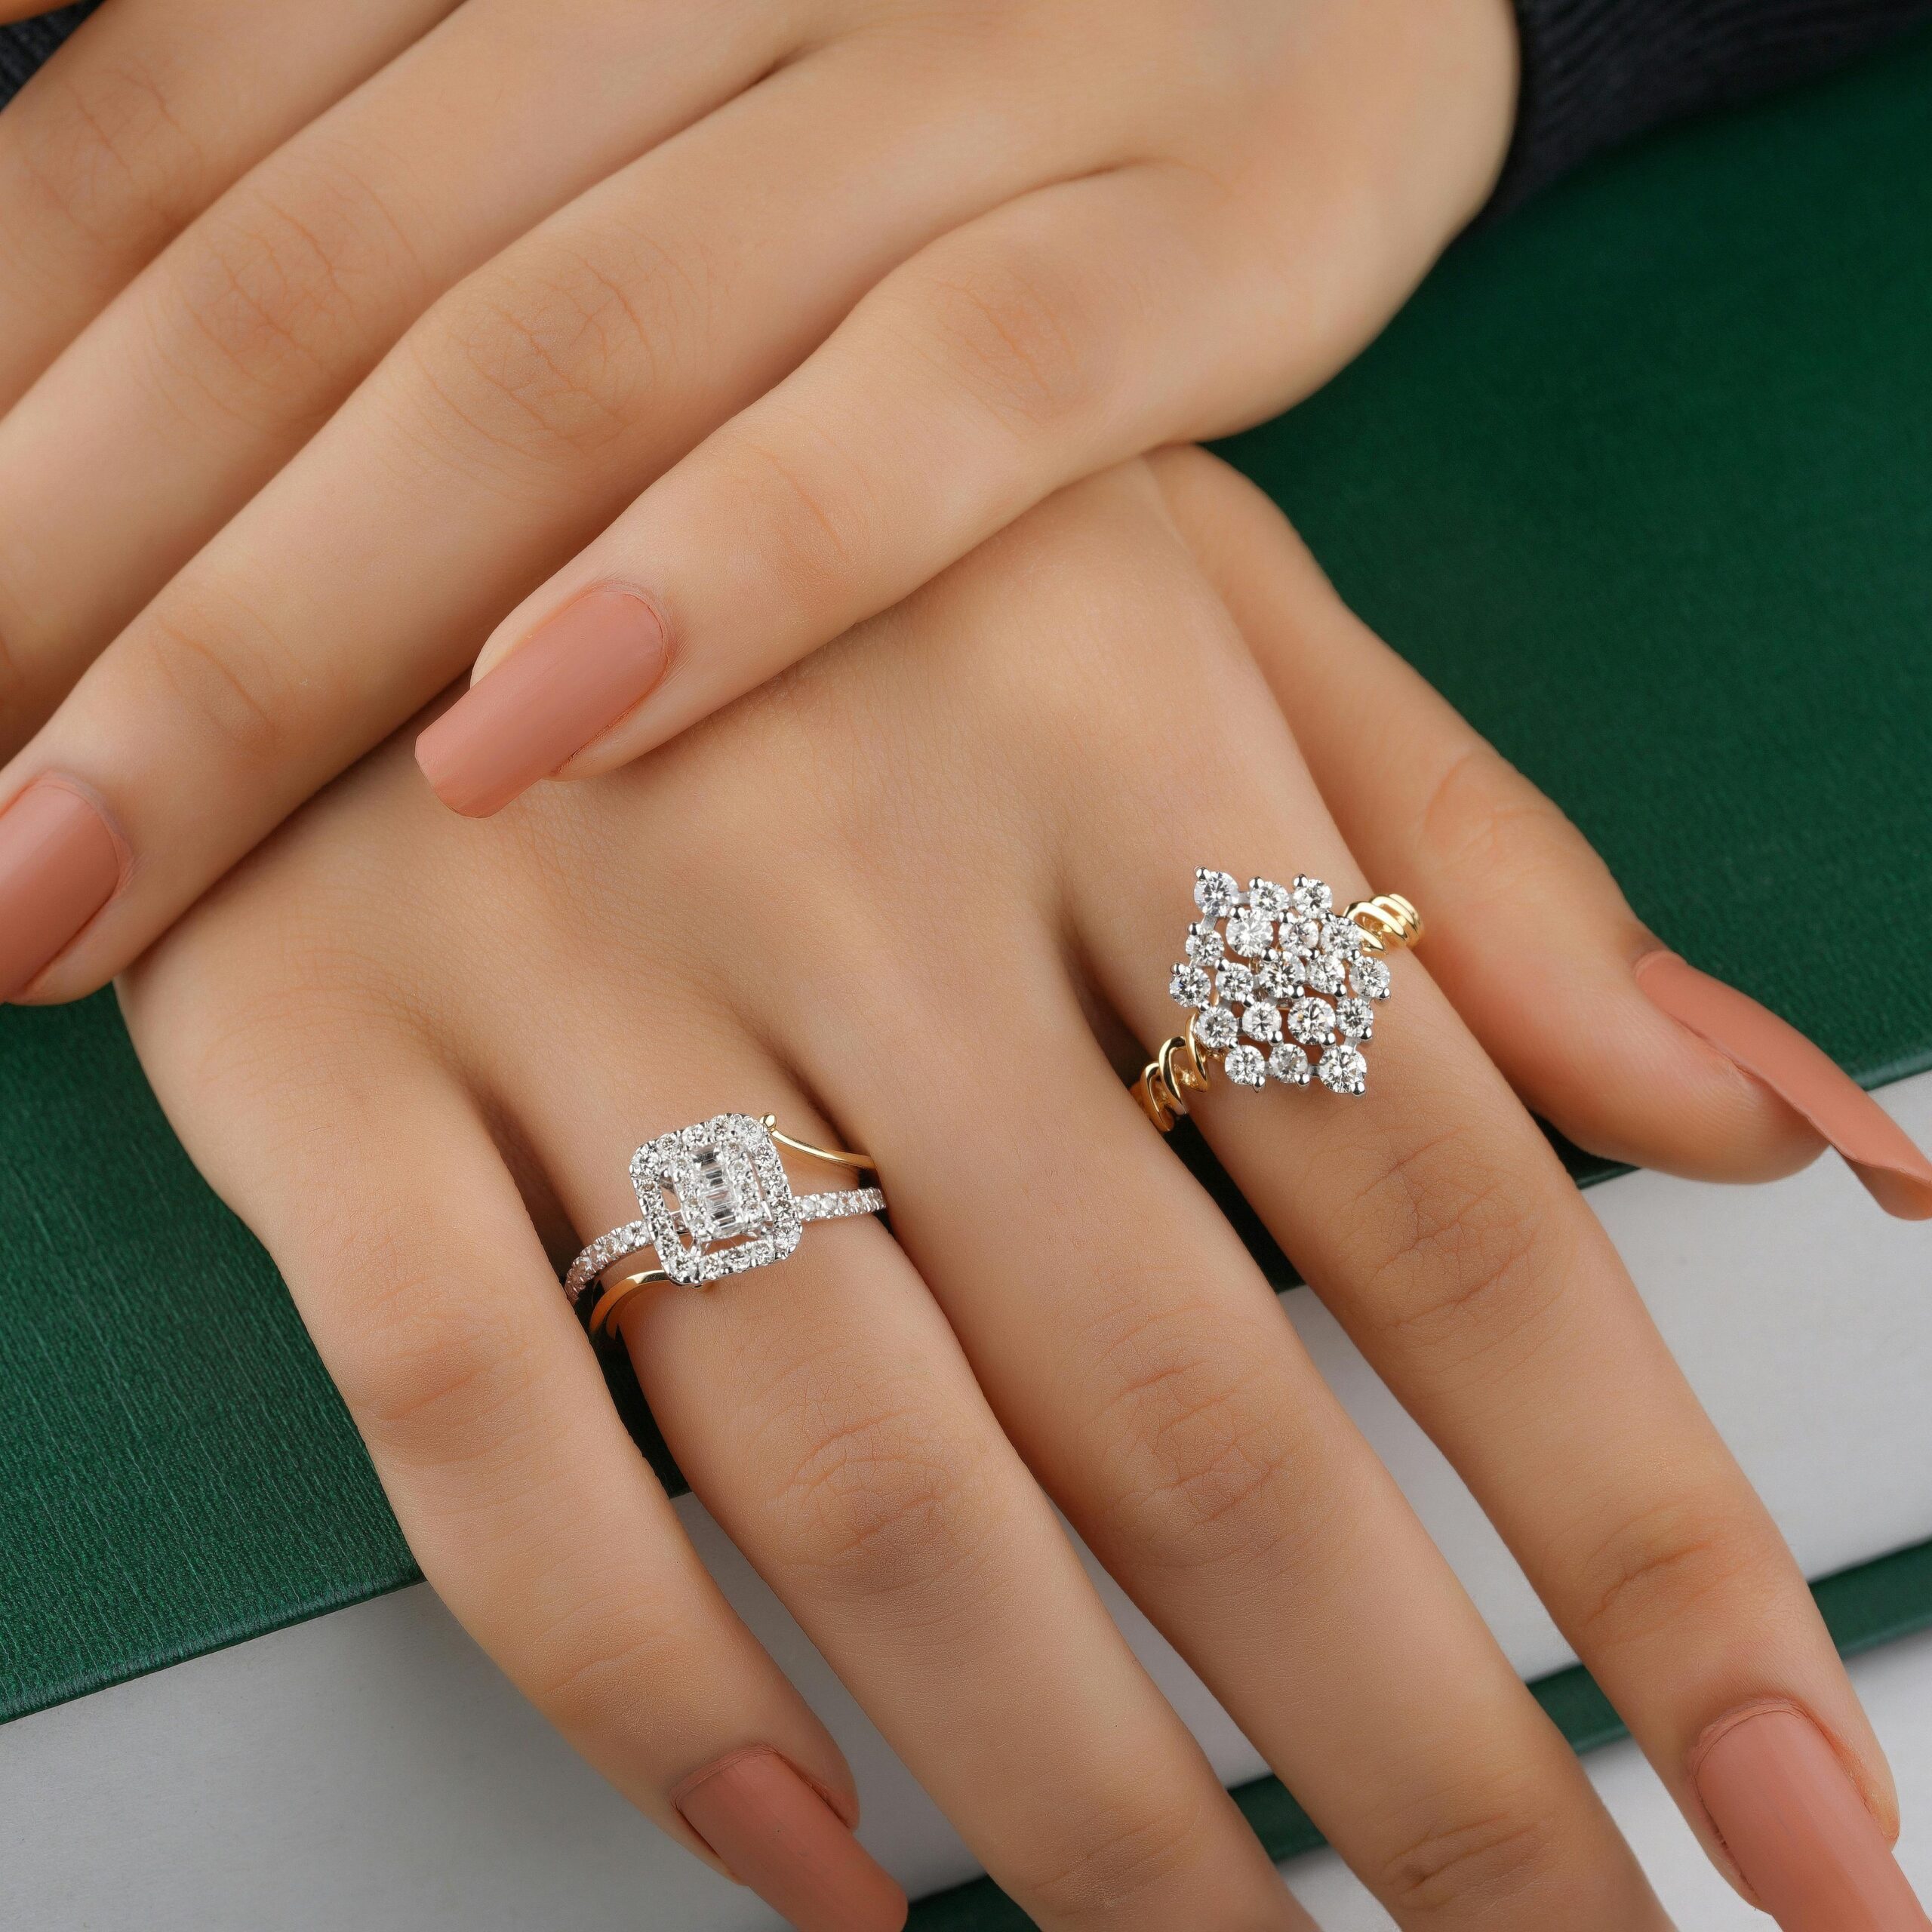 Vancouver’s Finest: Best Engagement Ring Shops Explored